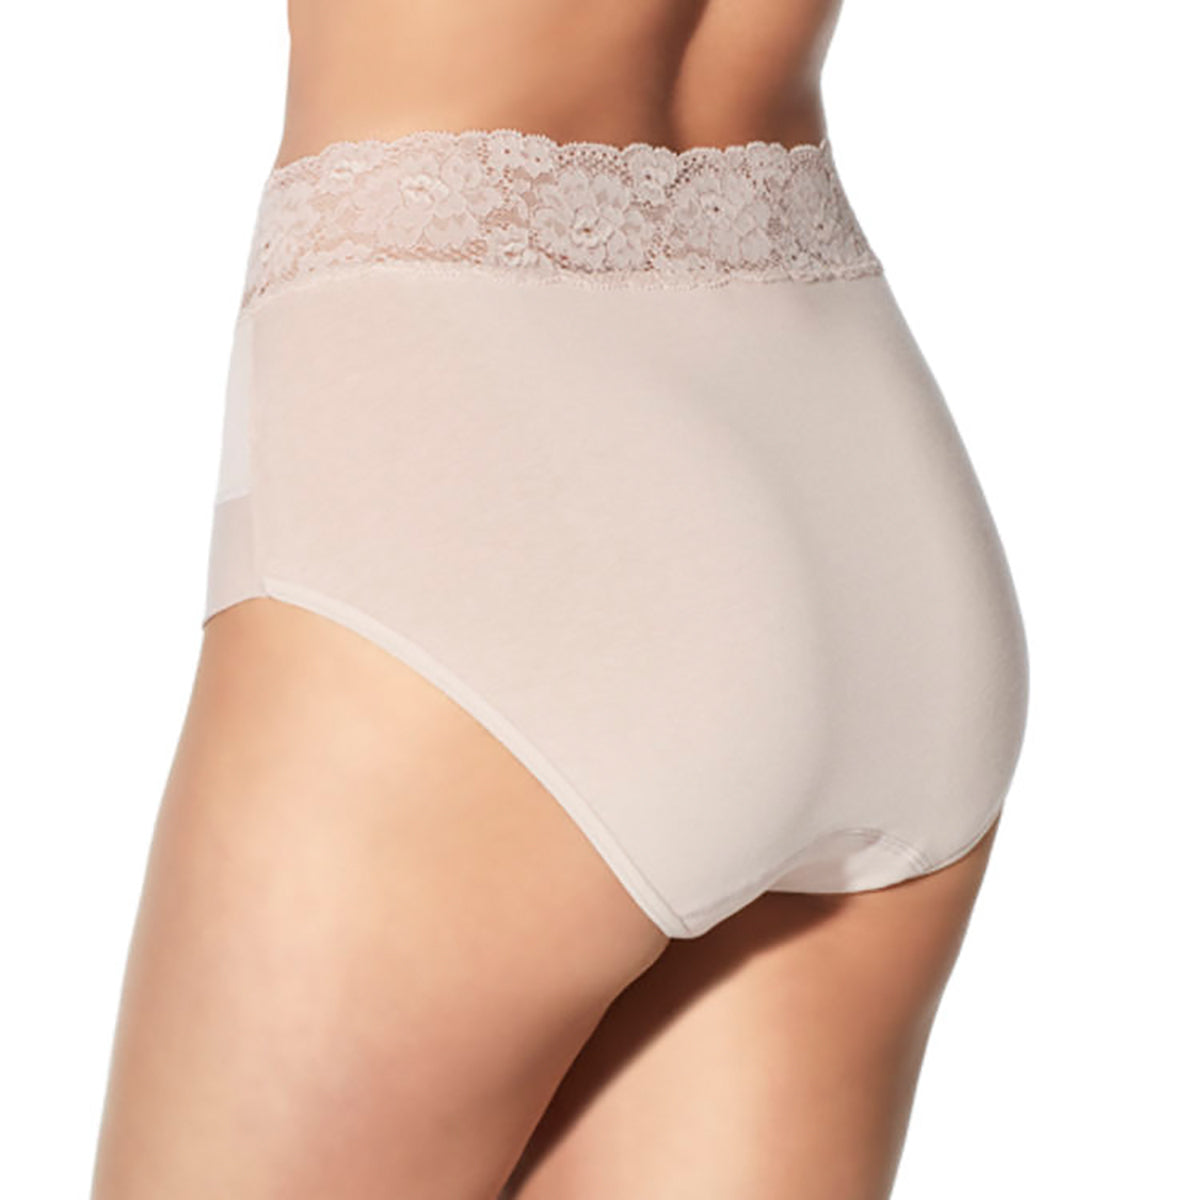 Hanro Women's Cotton Seamless Full Brief Panty, Black, X-Small at   Women's Clothing store: Briefs Underwear